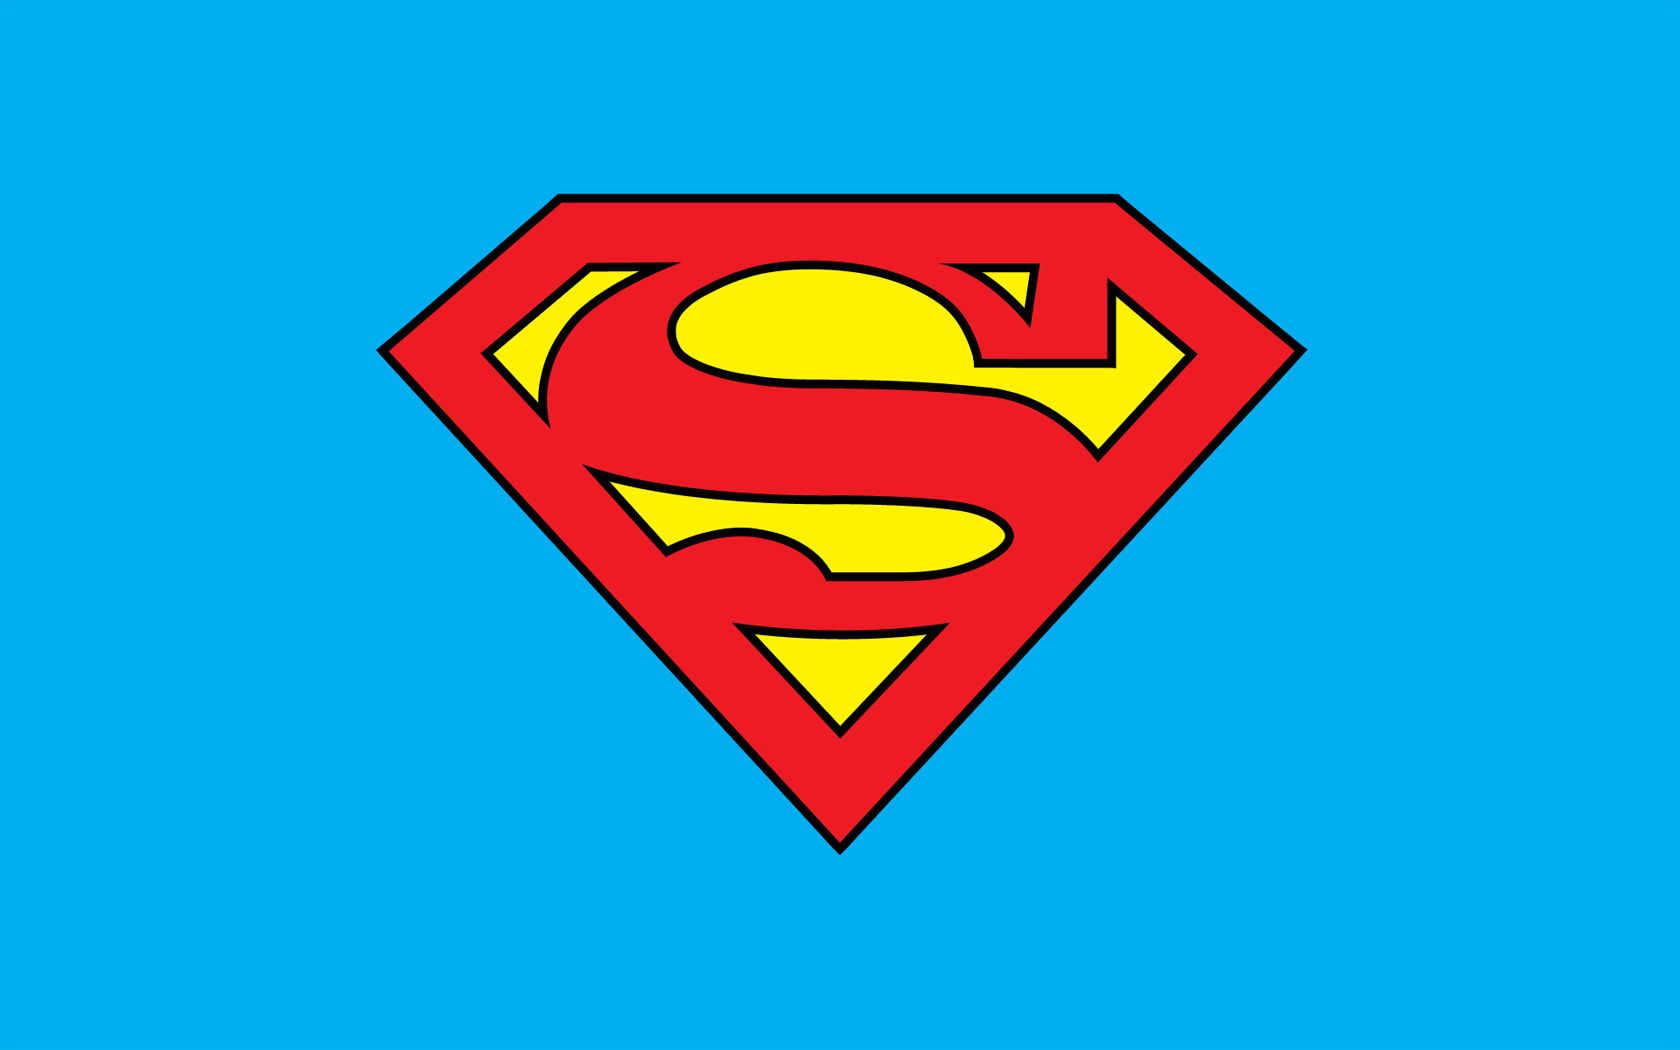 Superman logo by stevegoy on DeviantArt